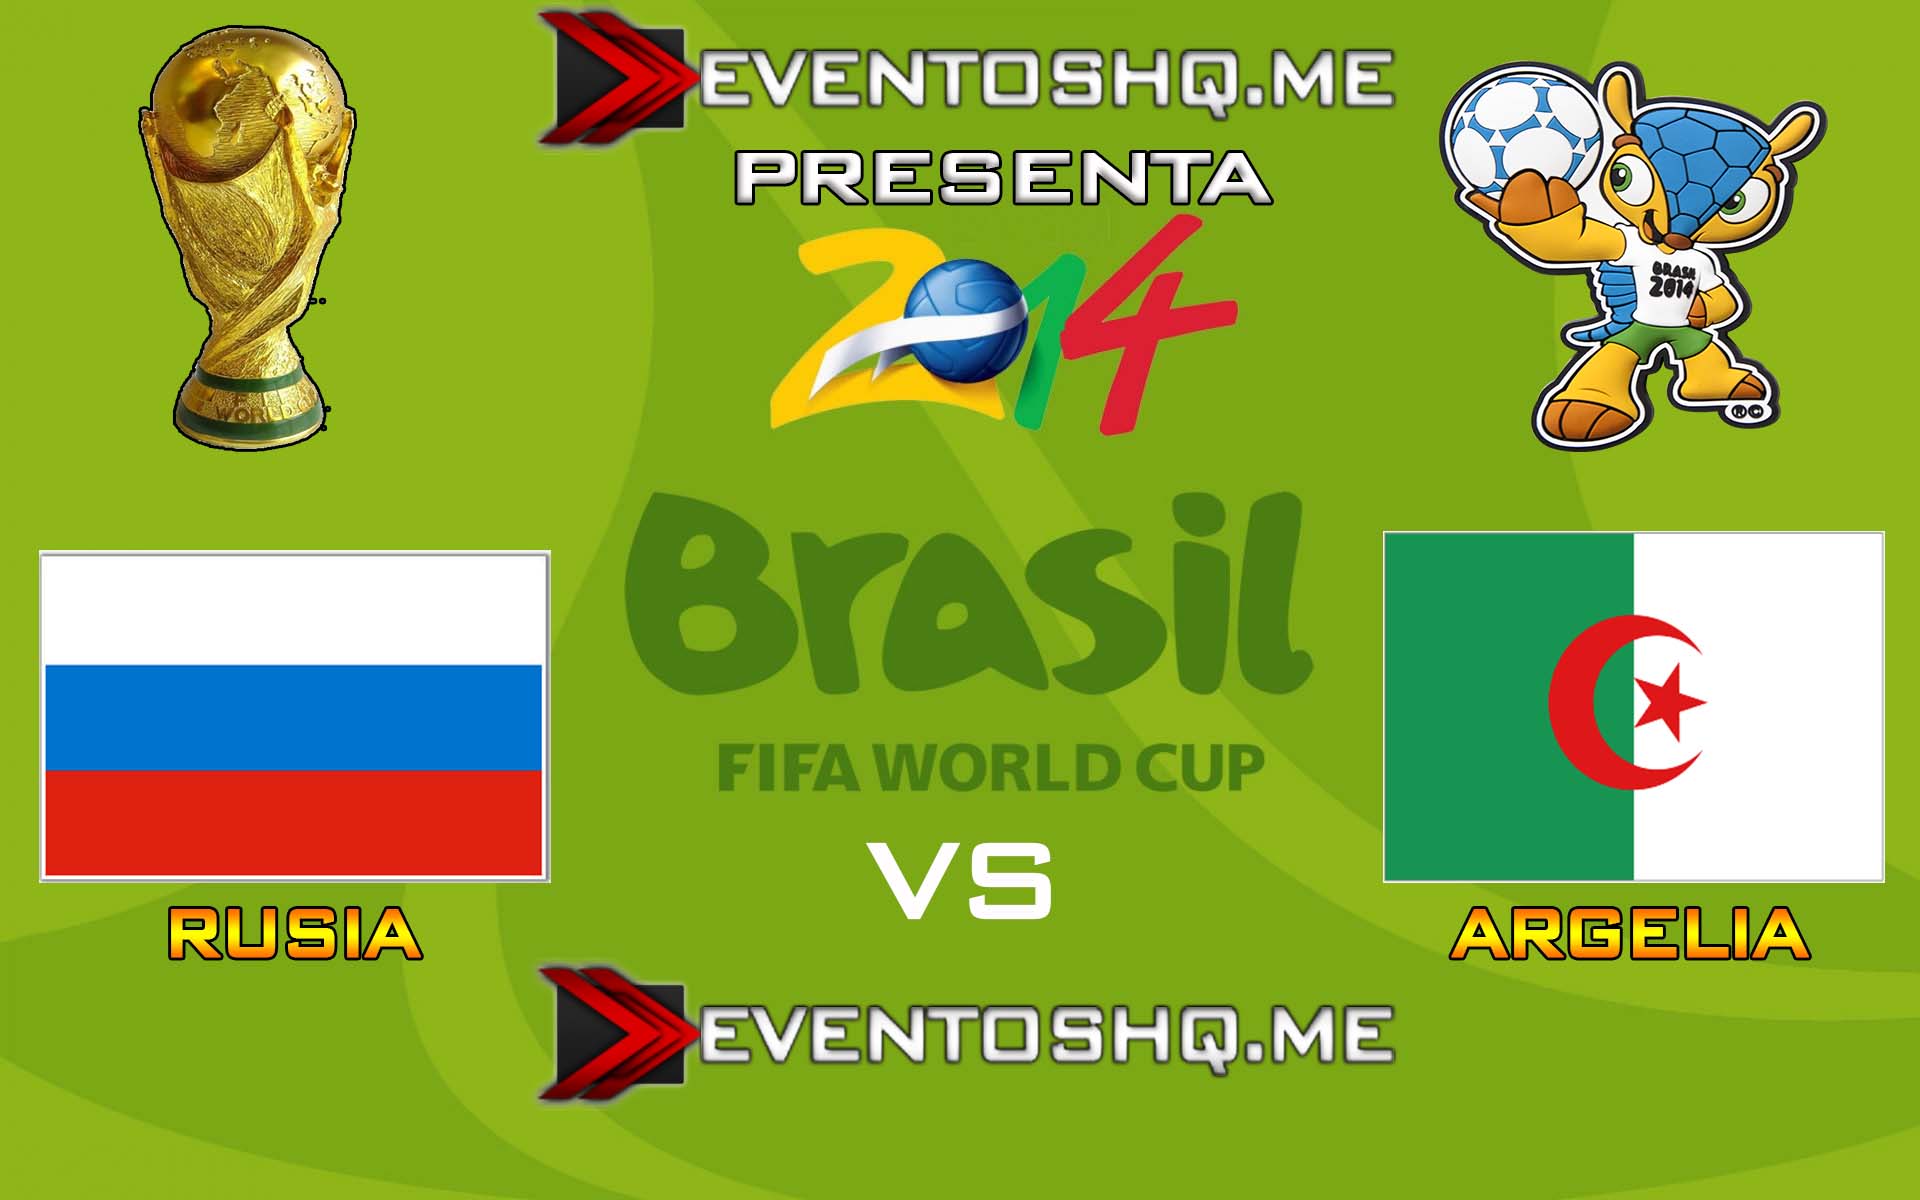 Ver en Vivo Rusia vs Argelia Mundial Brasil 2014 www.eventoshq.me